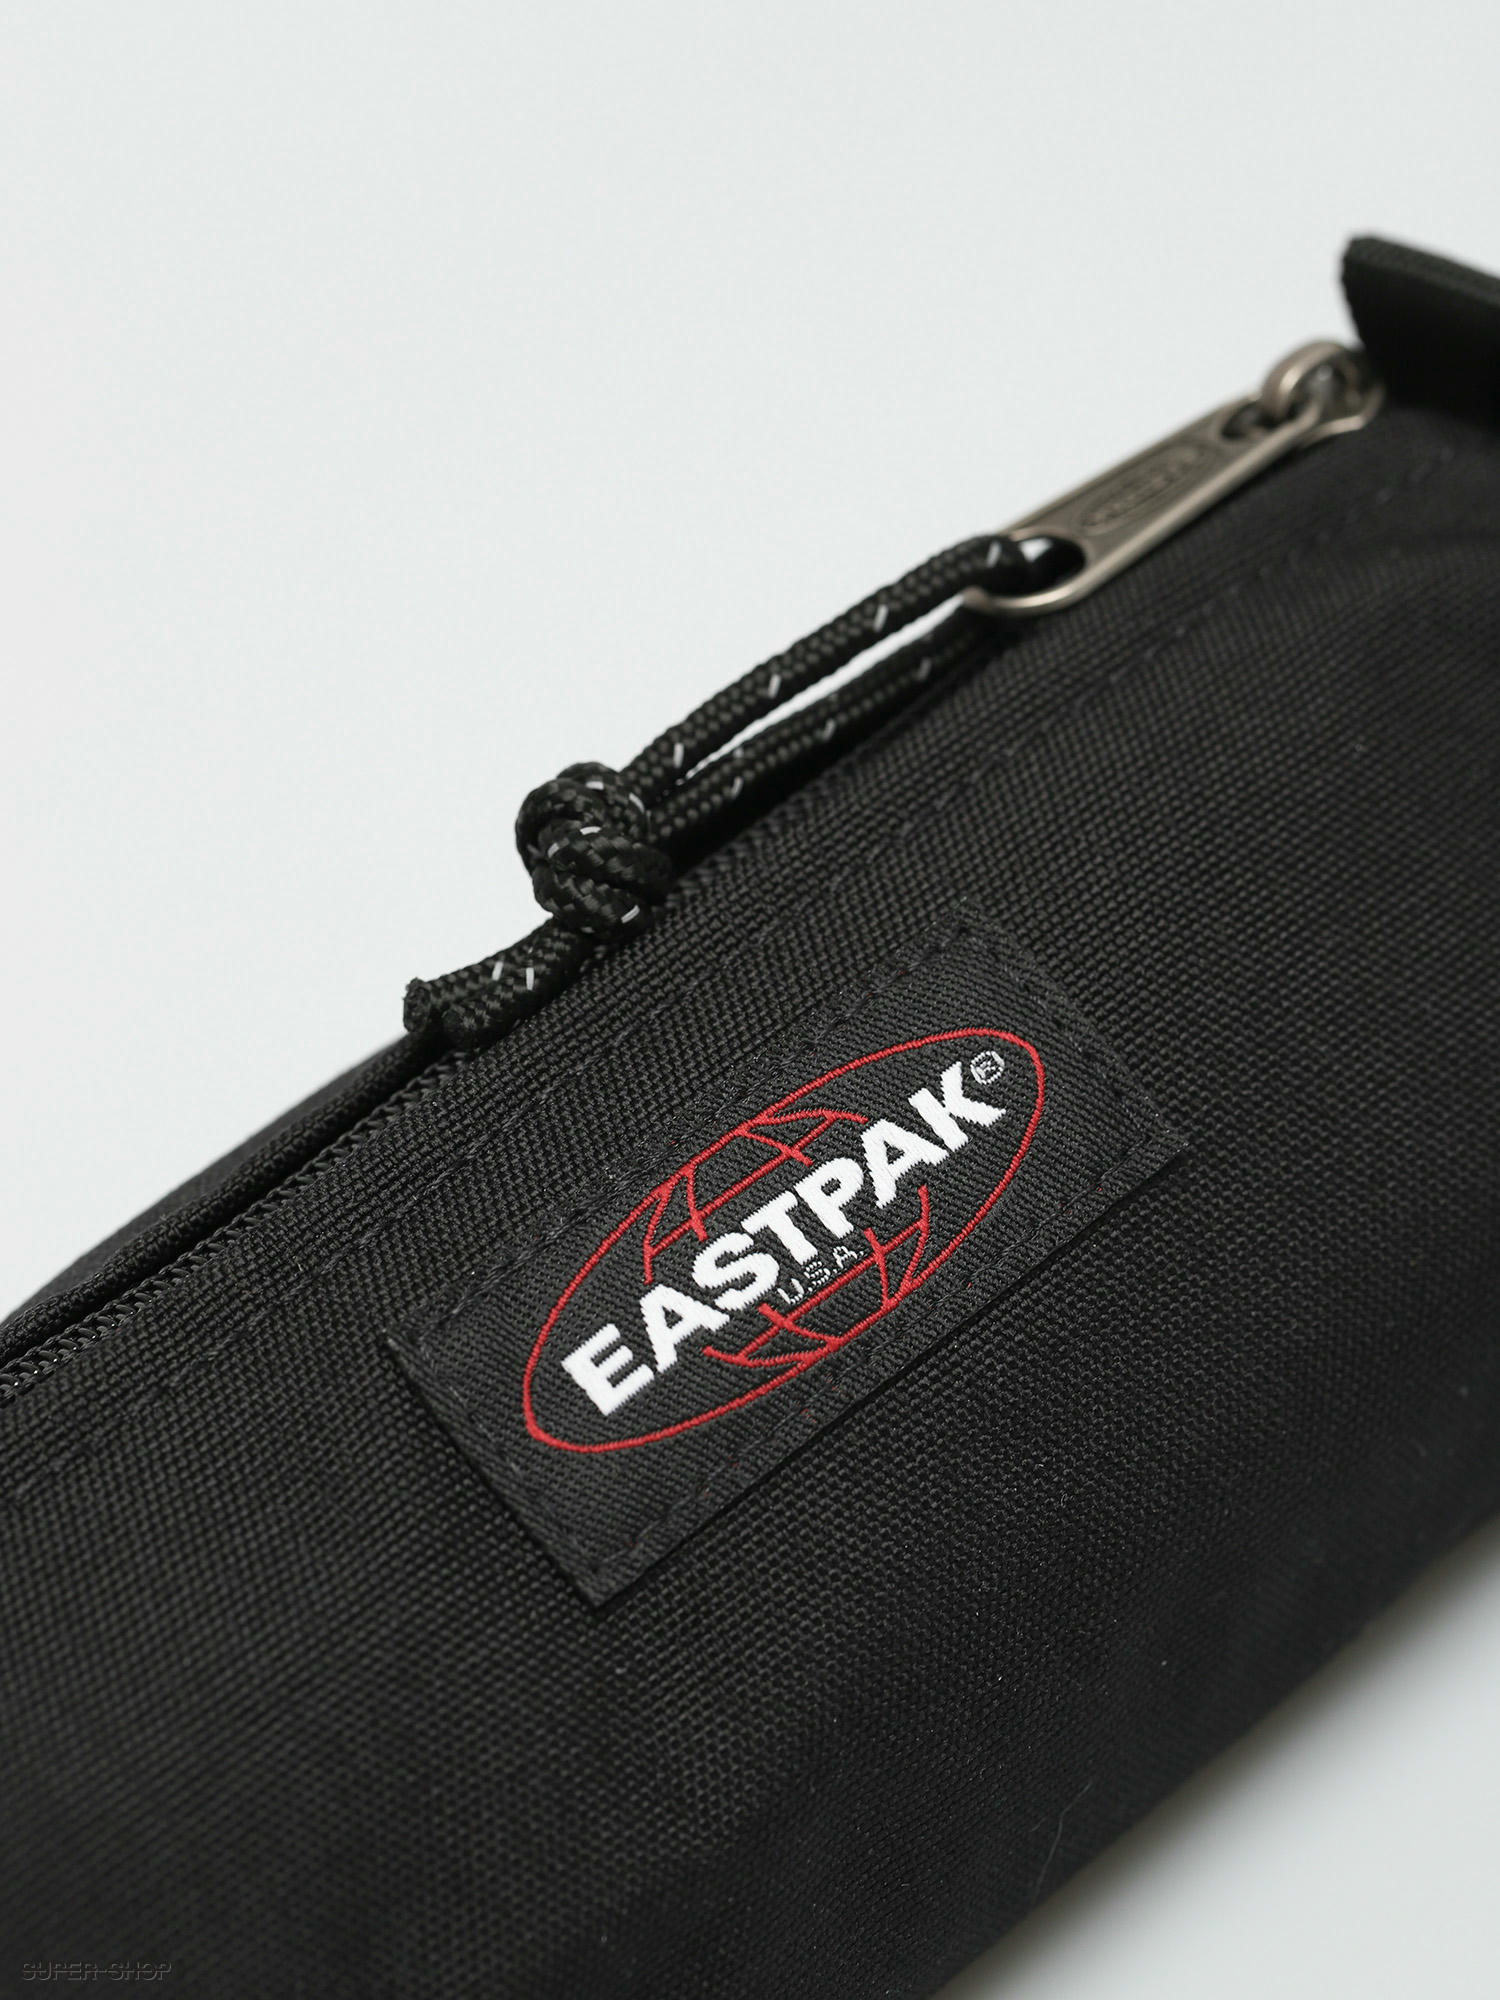 Eastpak Benchmark Single Pencil Case One Size